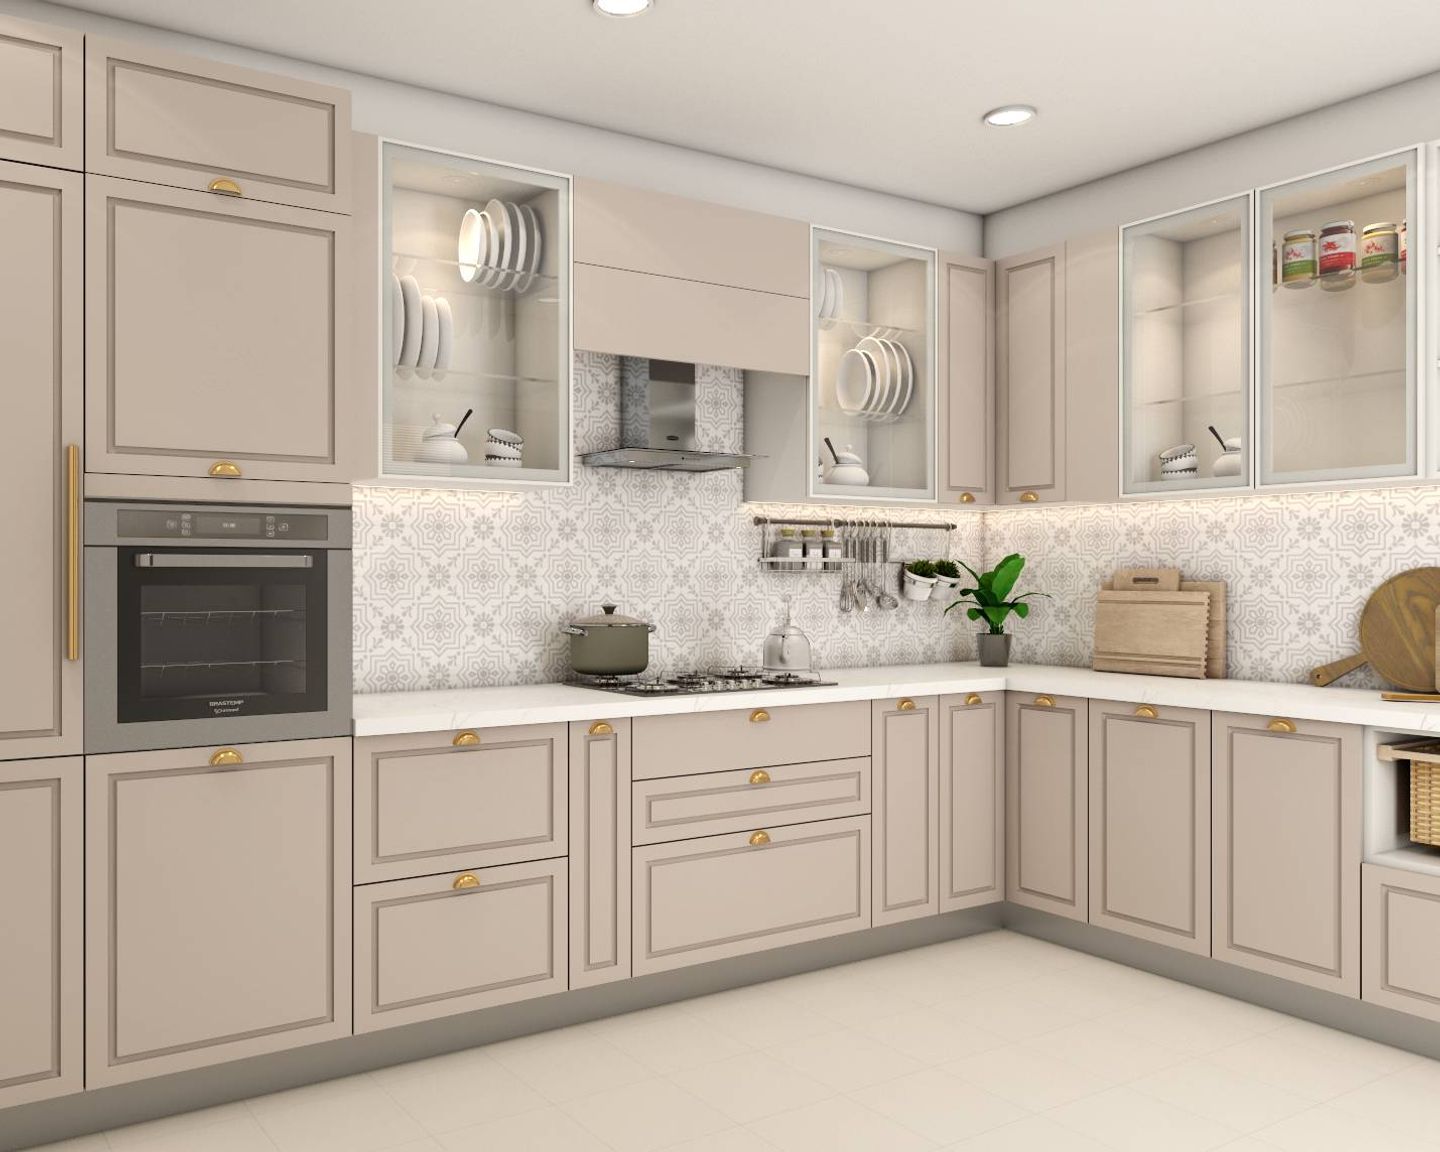 Modern Modular L-Shaped Kitchen Design With Cabinet Strip Lights